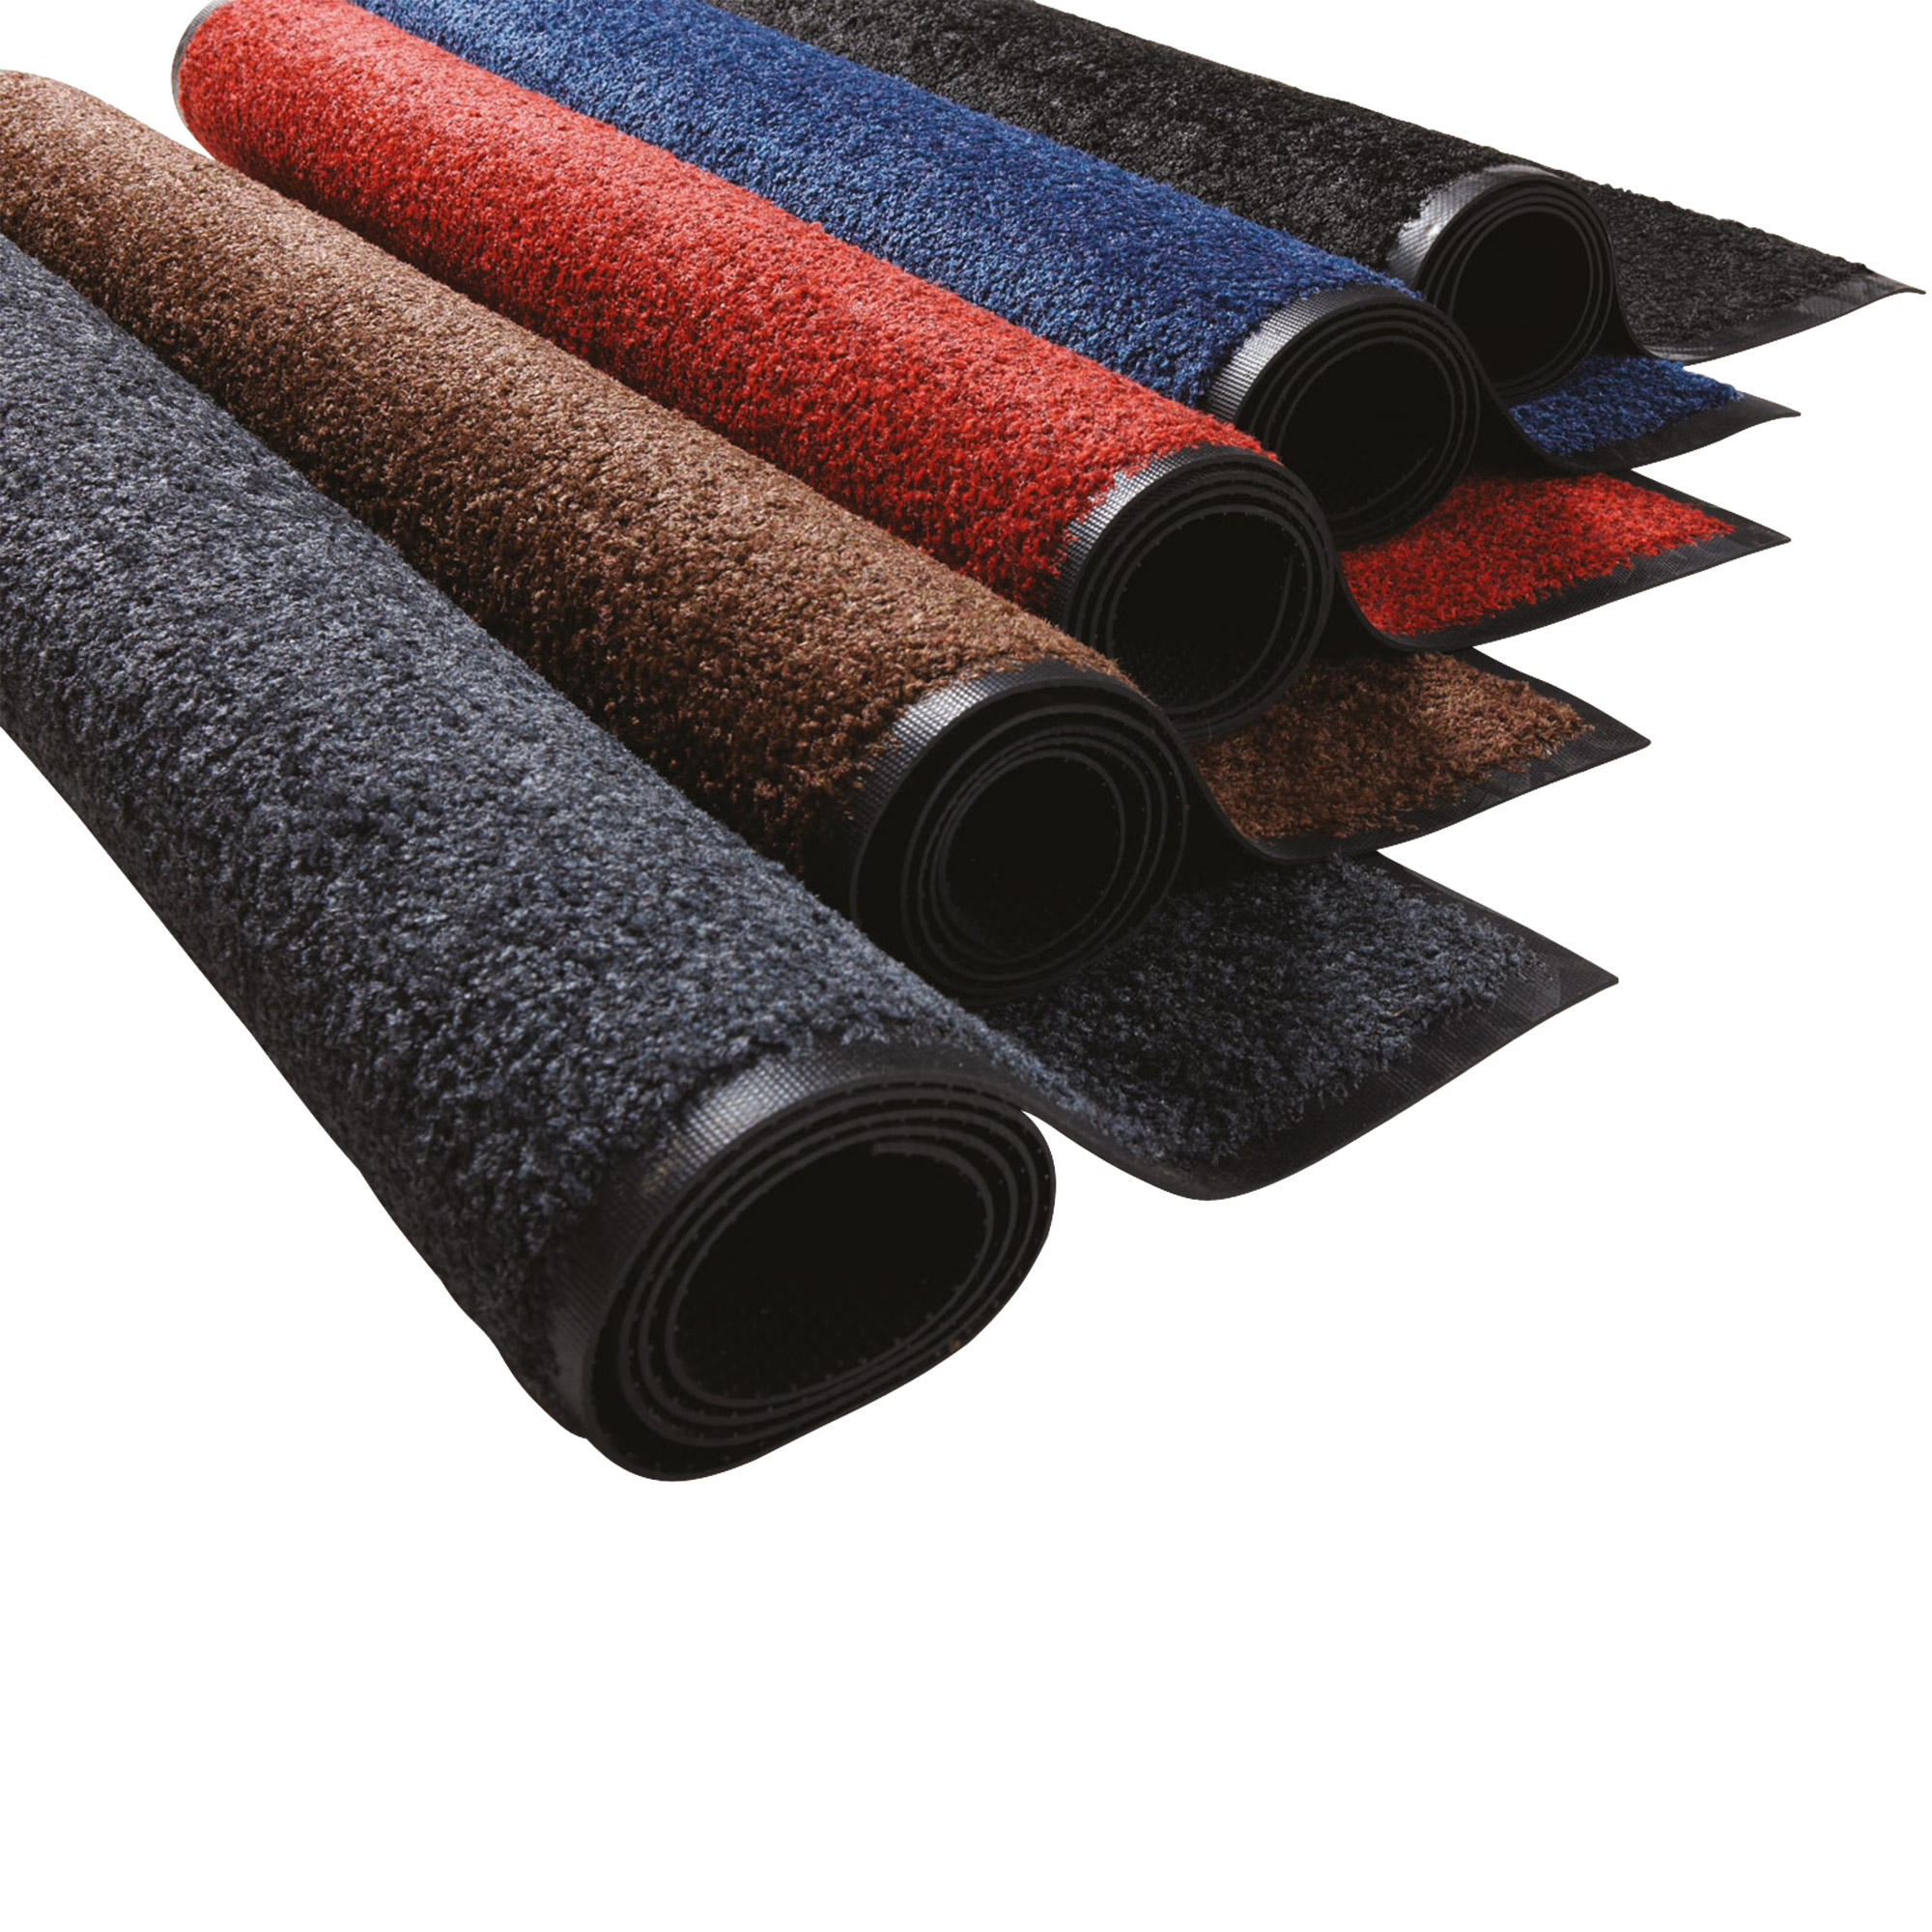 Buy EcoPlush Eco Friendly Carpet Mat Online